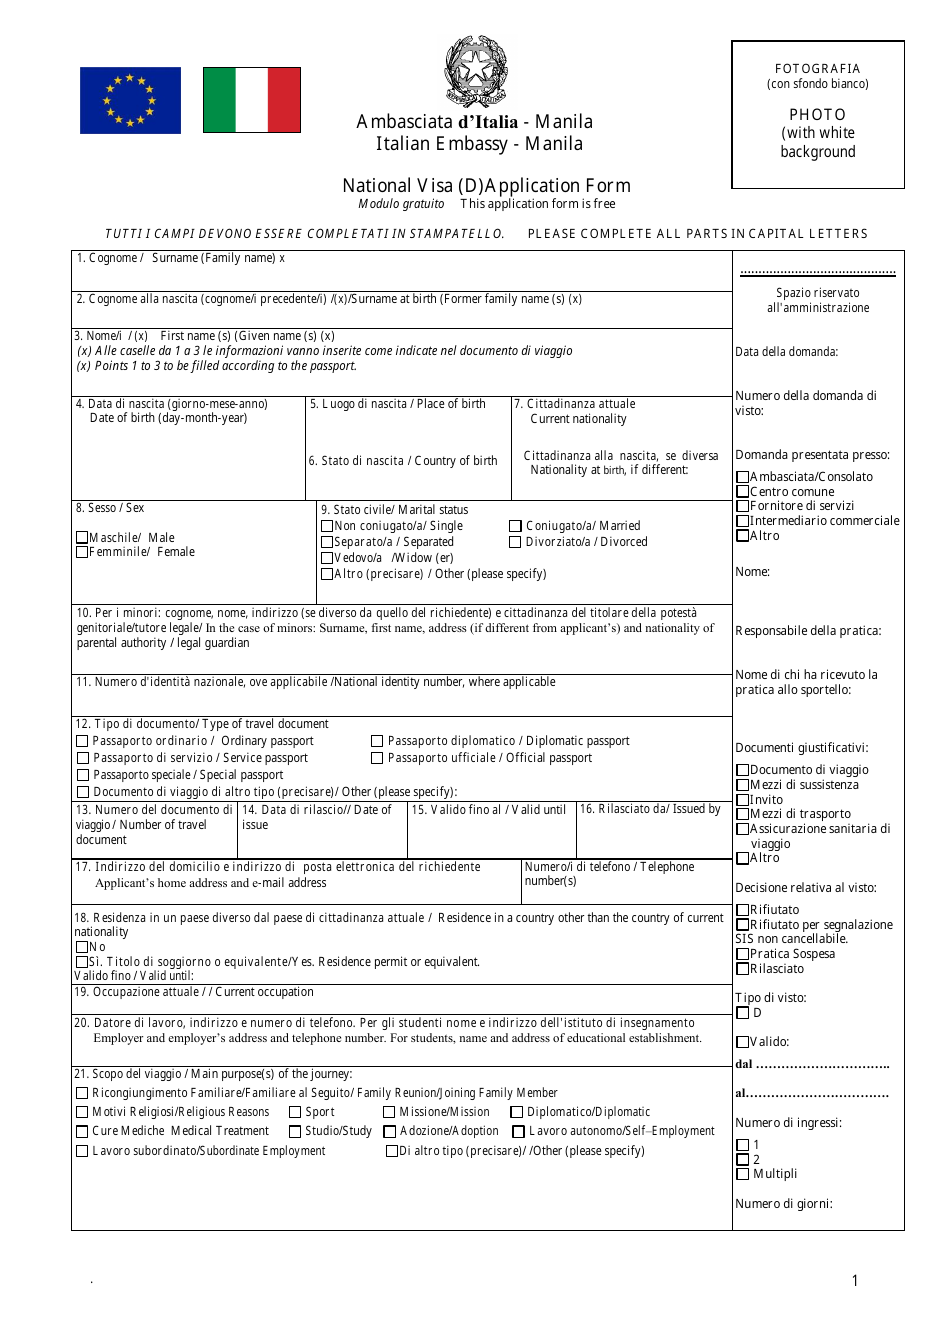 manila-philippines-italian-national-visa-d-application-form